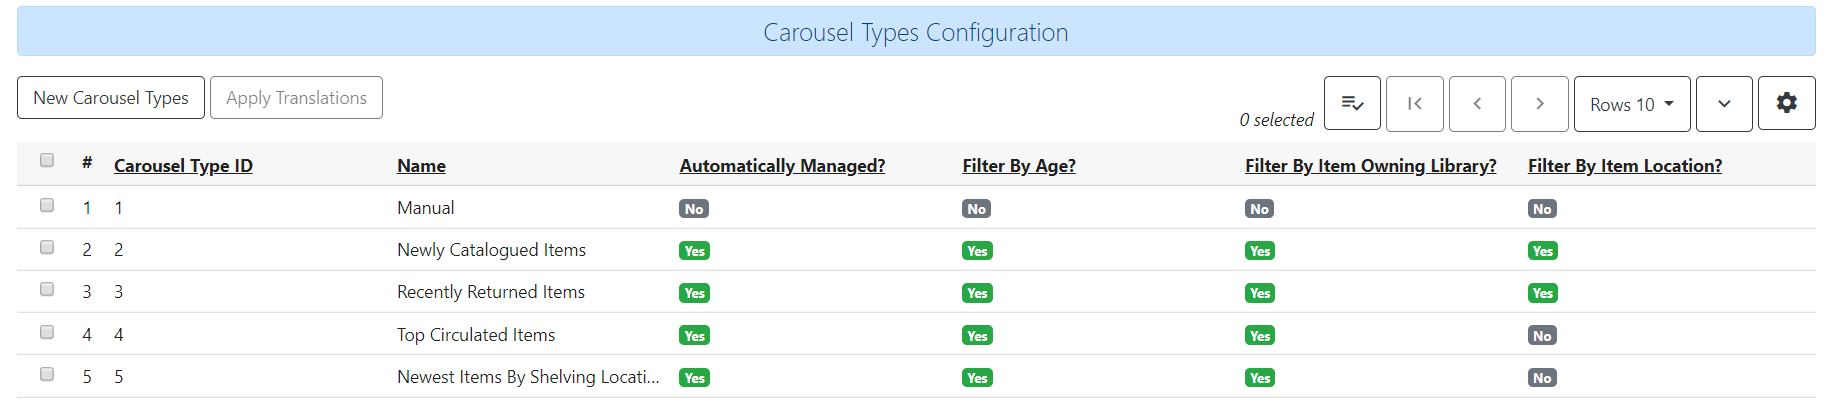 Carousel Types configuration screen